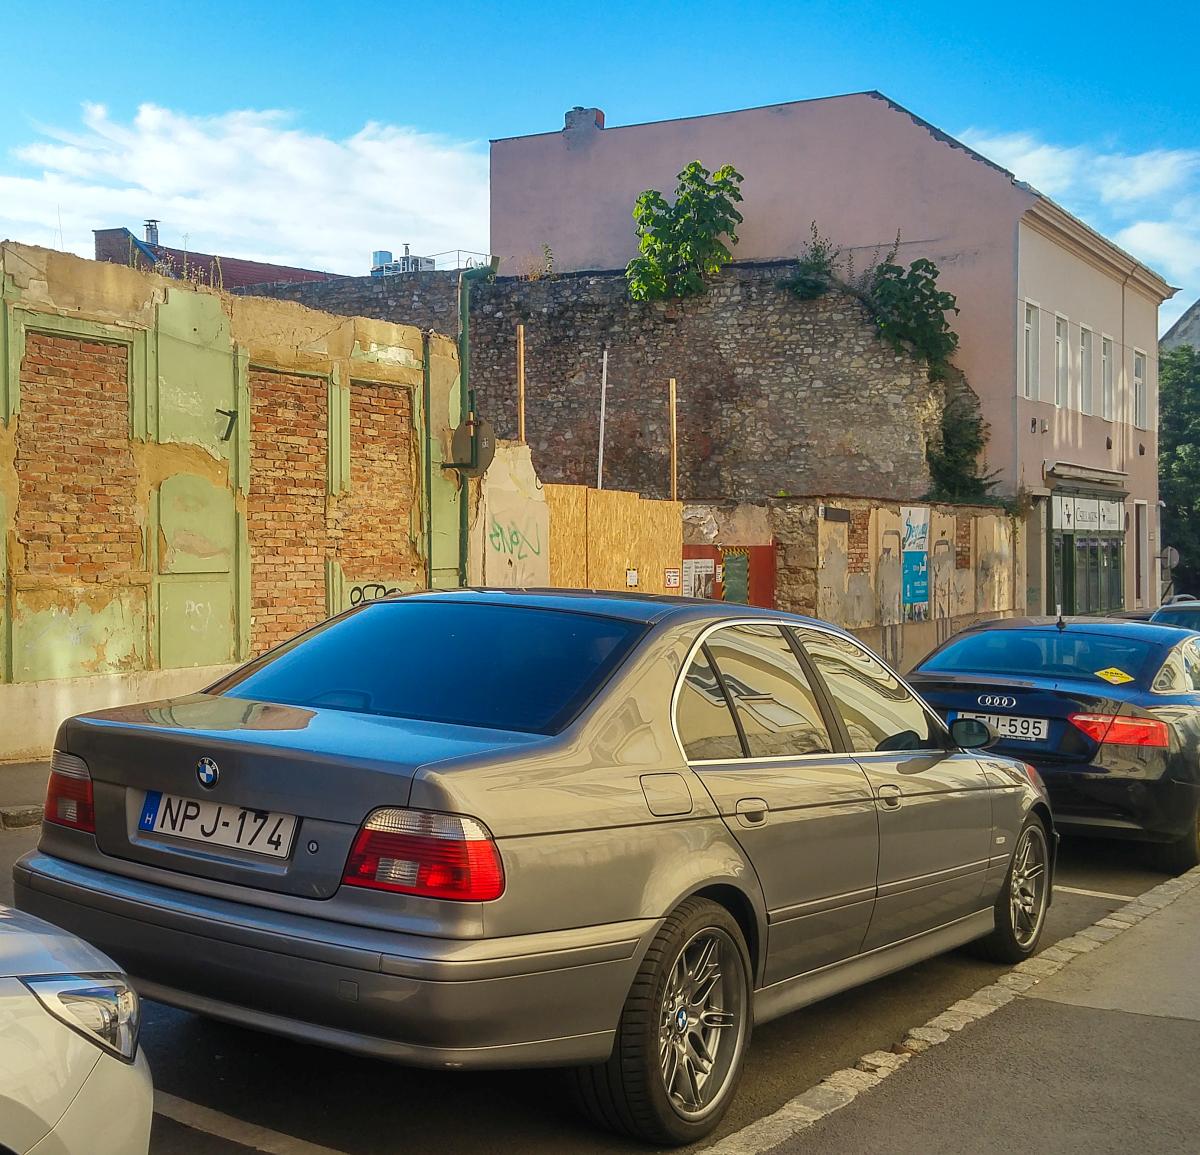 BMW 5er (e39) von hinten. Foto: Pécs (Hu), August, 2019